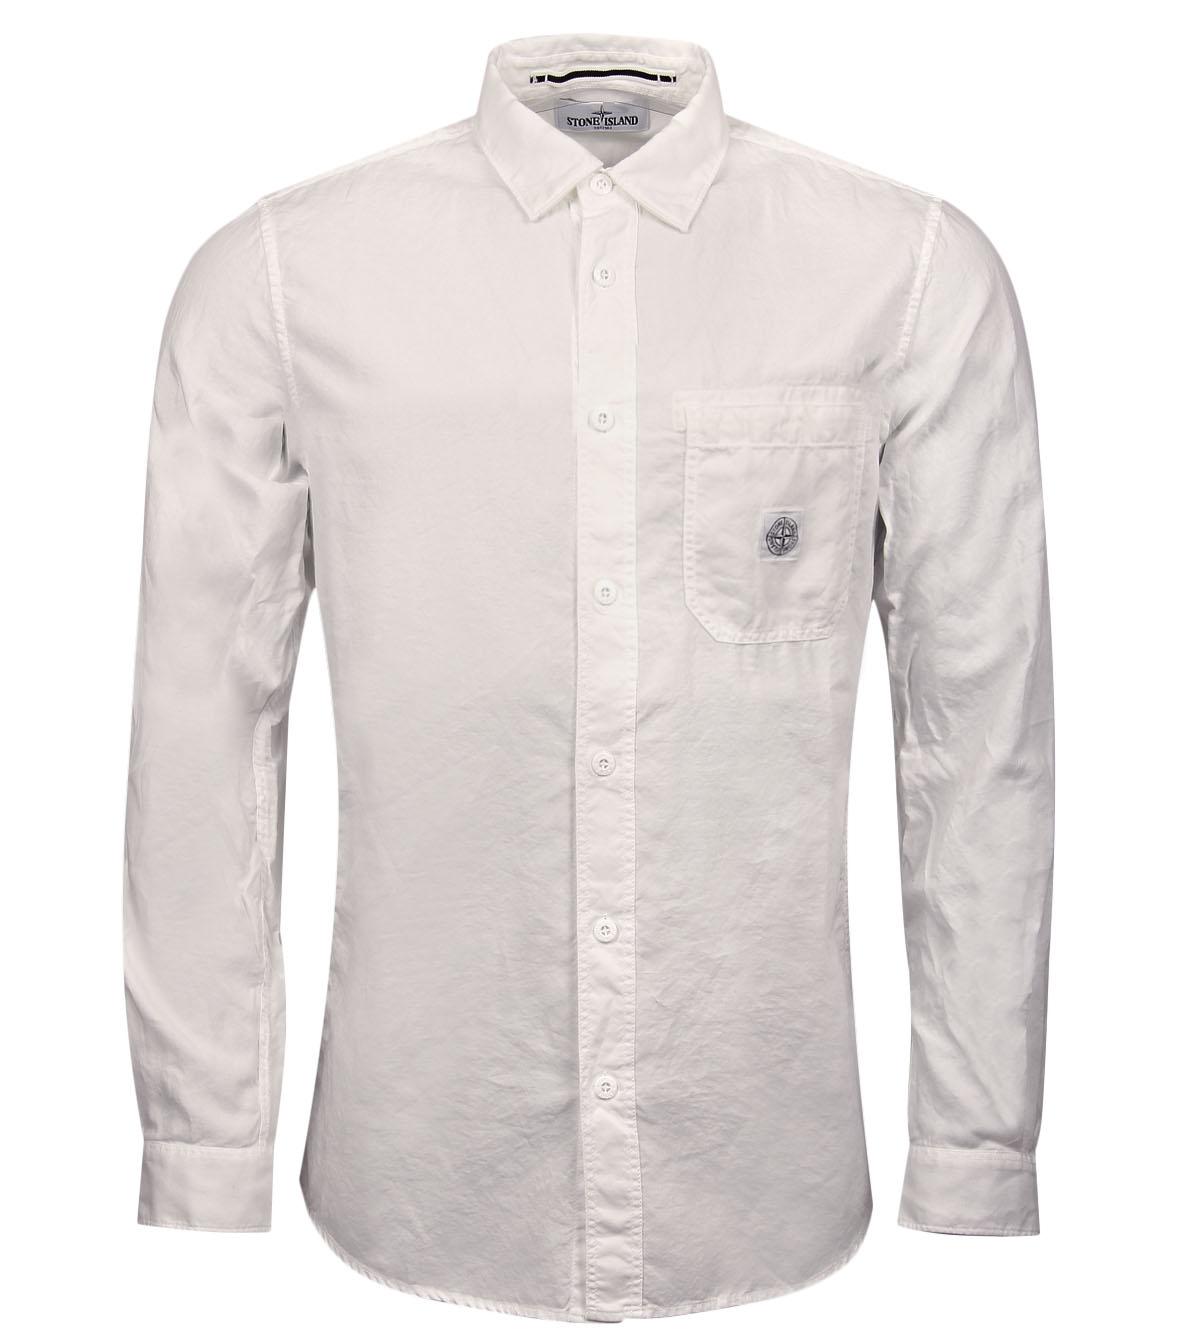 Foto Stone Island White Oxford Cotton Regular Fit Shirt foto 537089